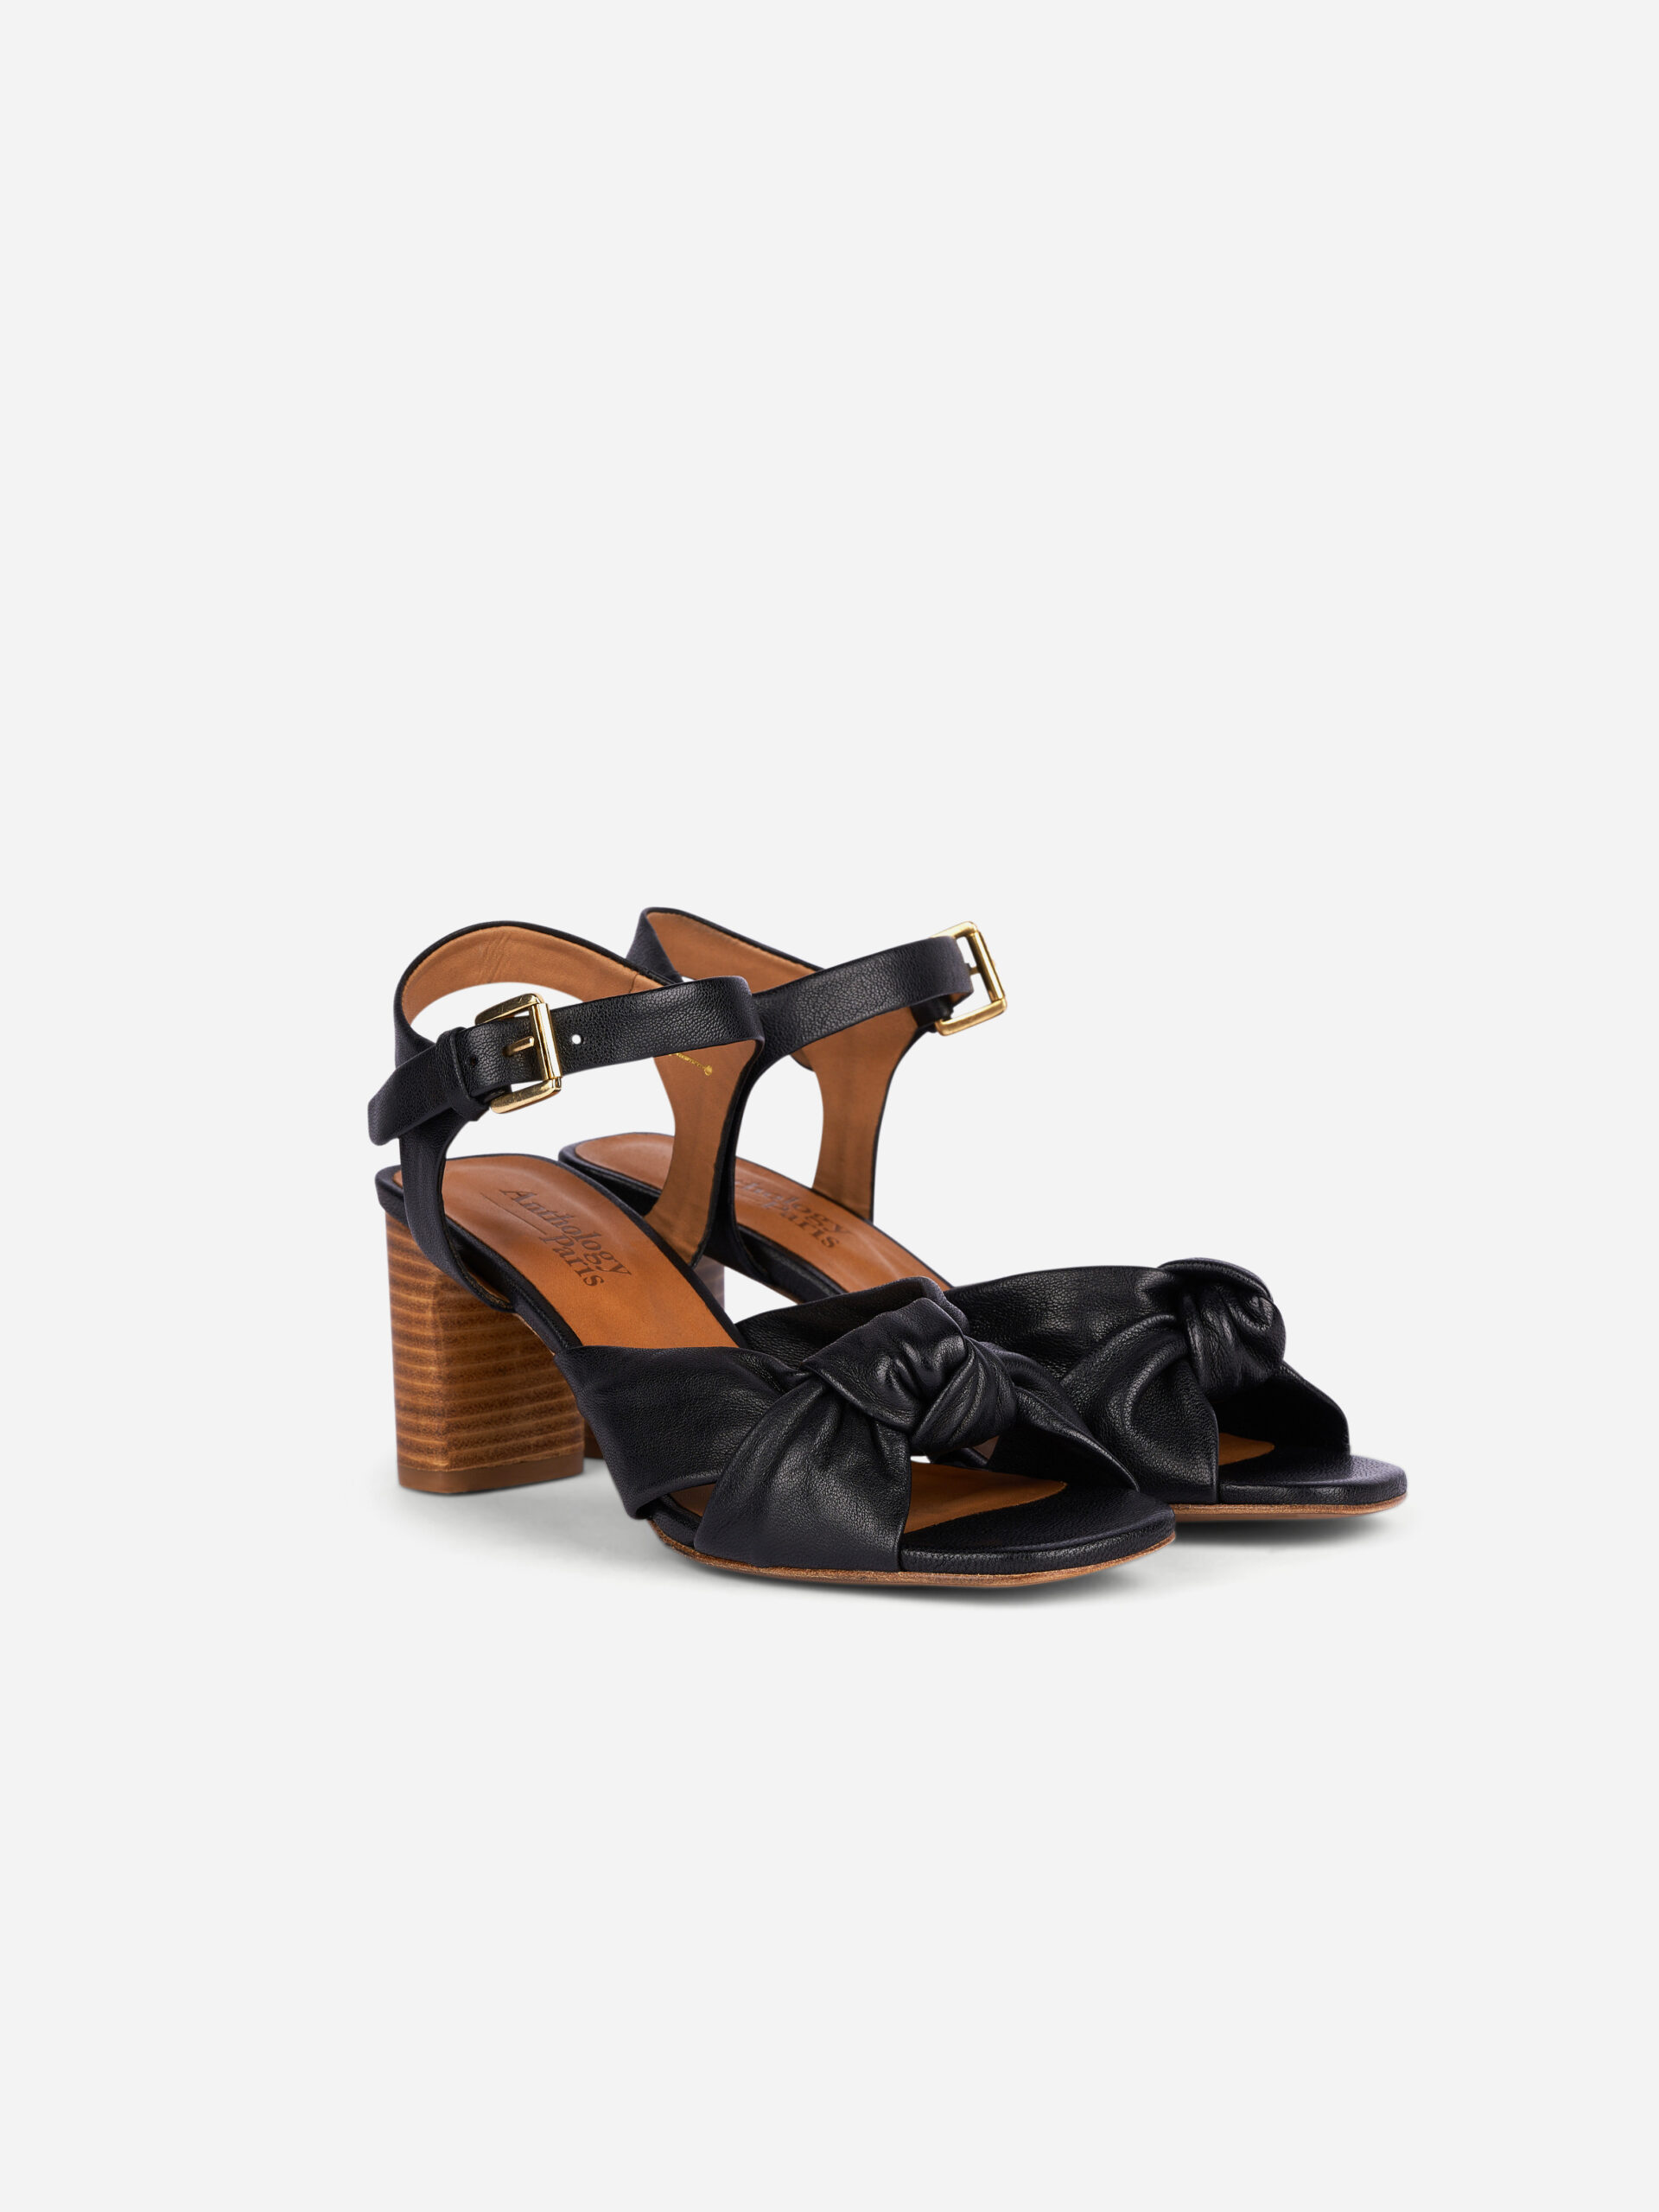 YELENA_BOMBER NOIR_black-leather-heels-sandals-anthology-matchboxathens